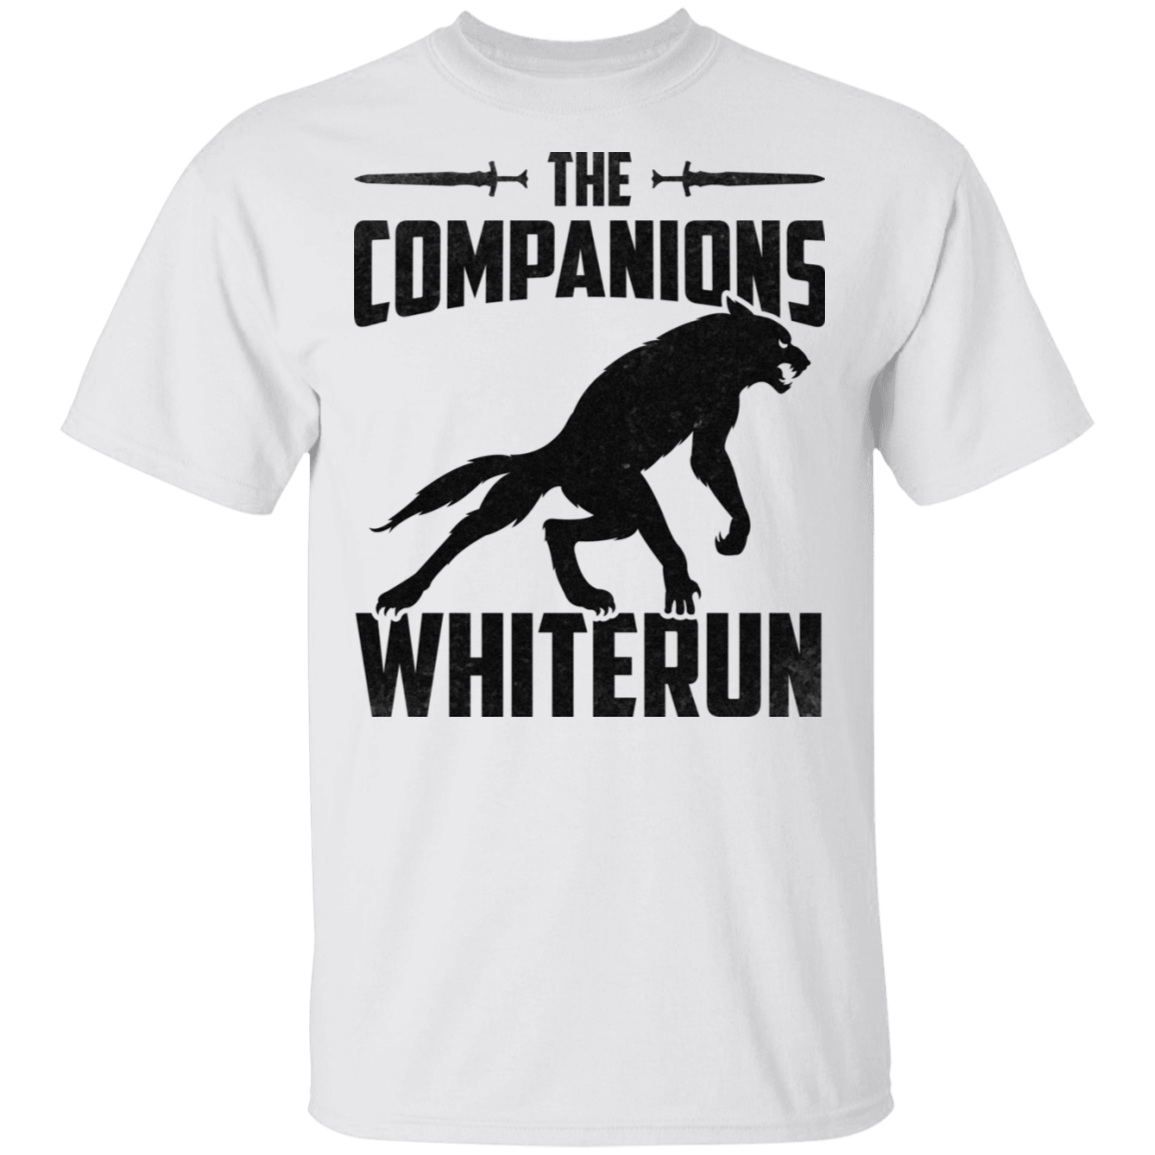 The Companions Whiterun Light Cotton T-Shirt